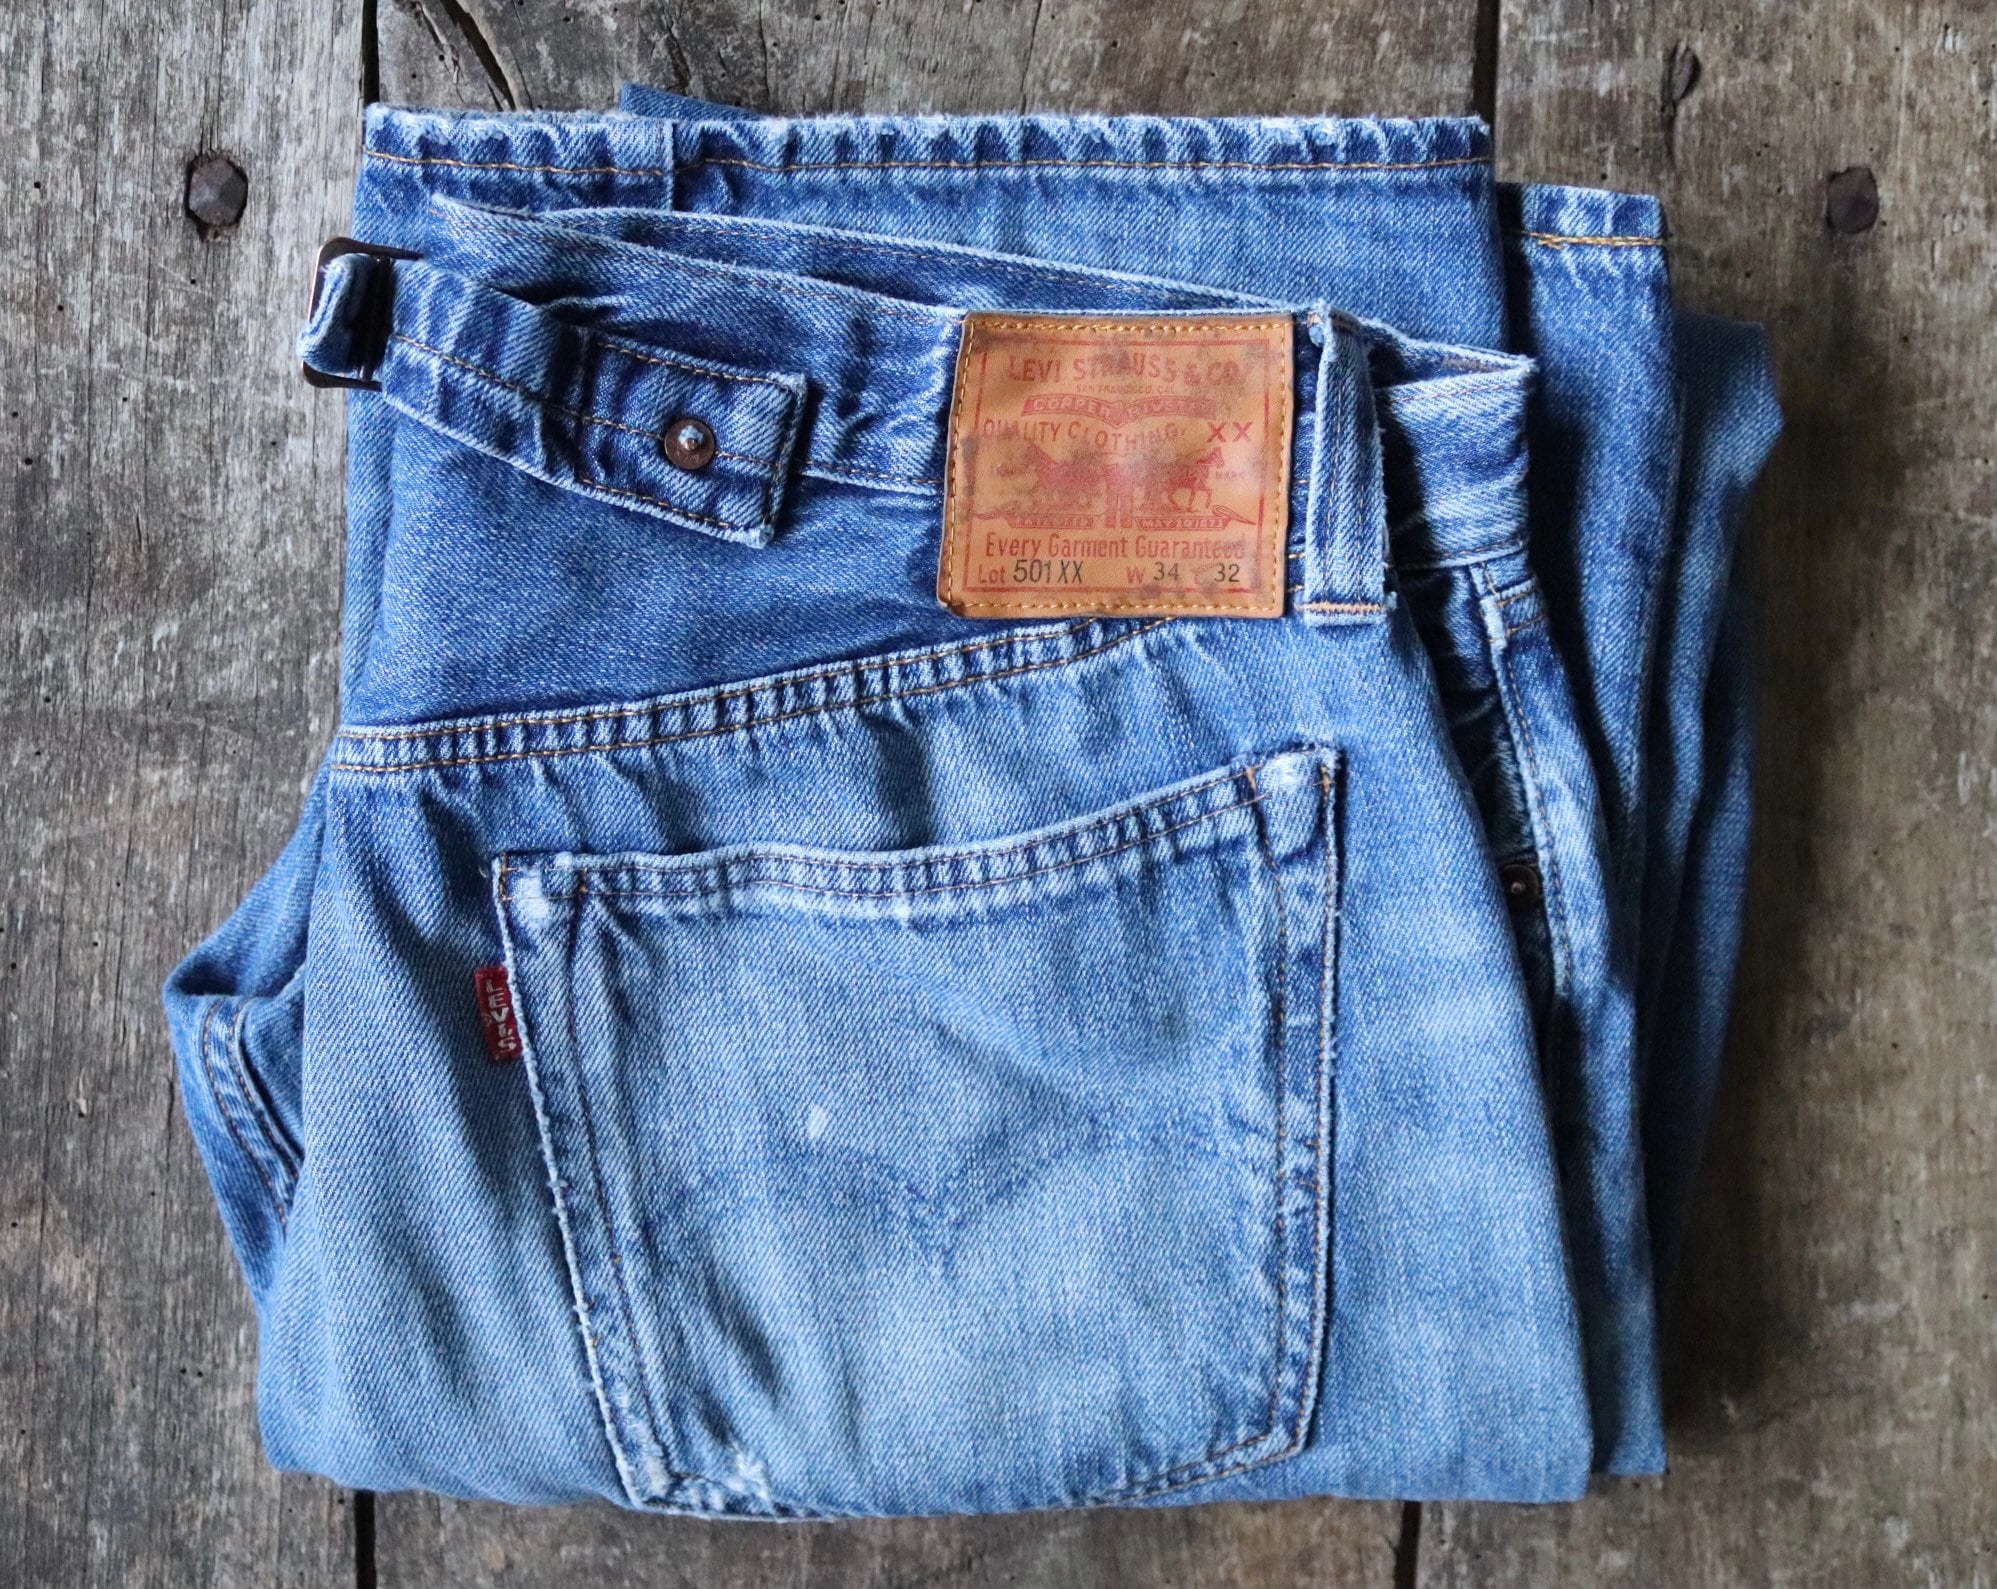 Vintage Levi Strauss Levis denim selvedge big e red tab jeans 501 501XX  buckle cinch back 33” x 31” indigo workwear work chore button fly